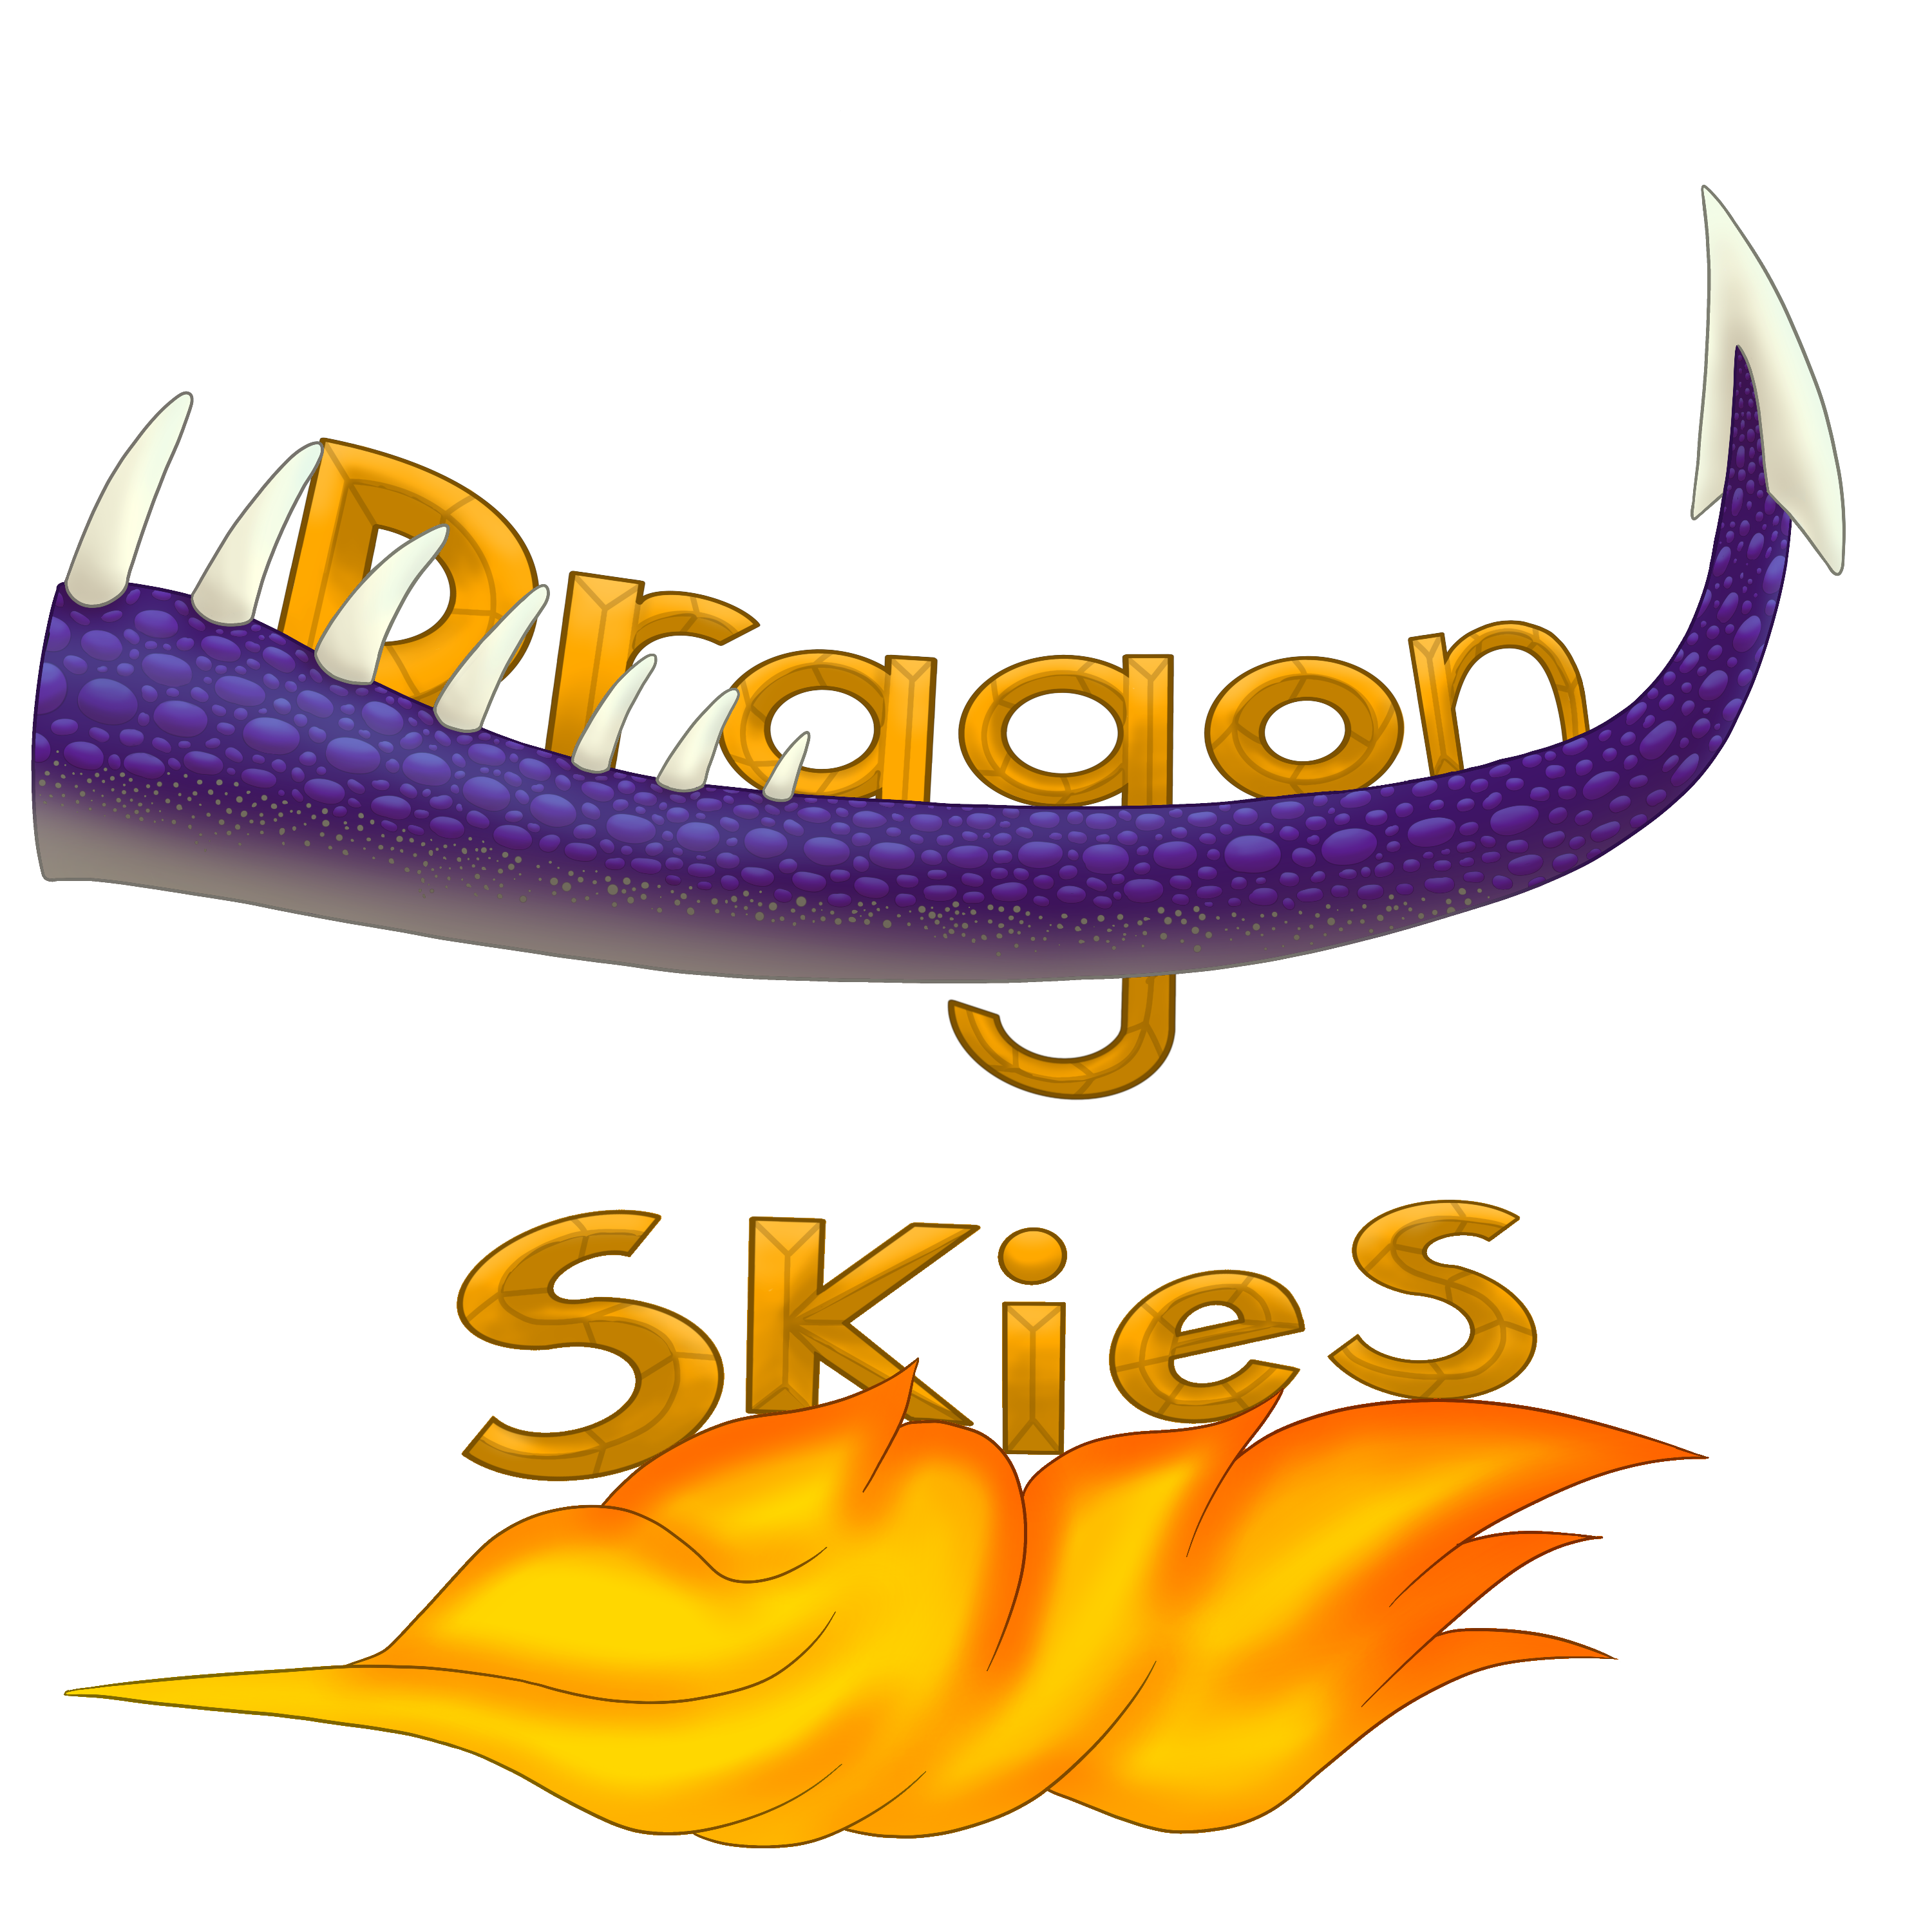 Dragon skies prototype